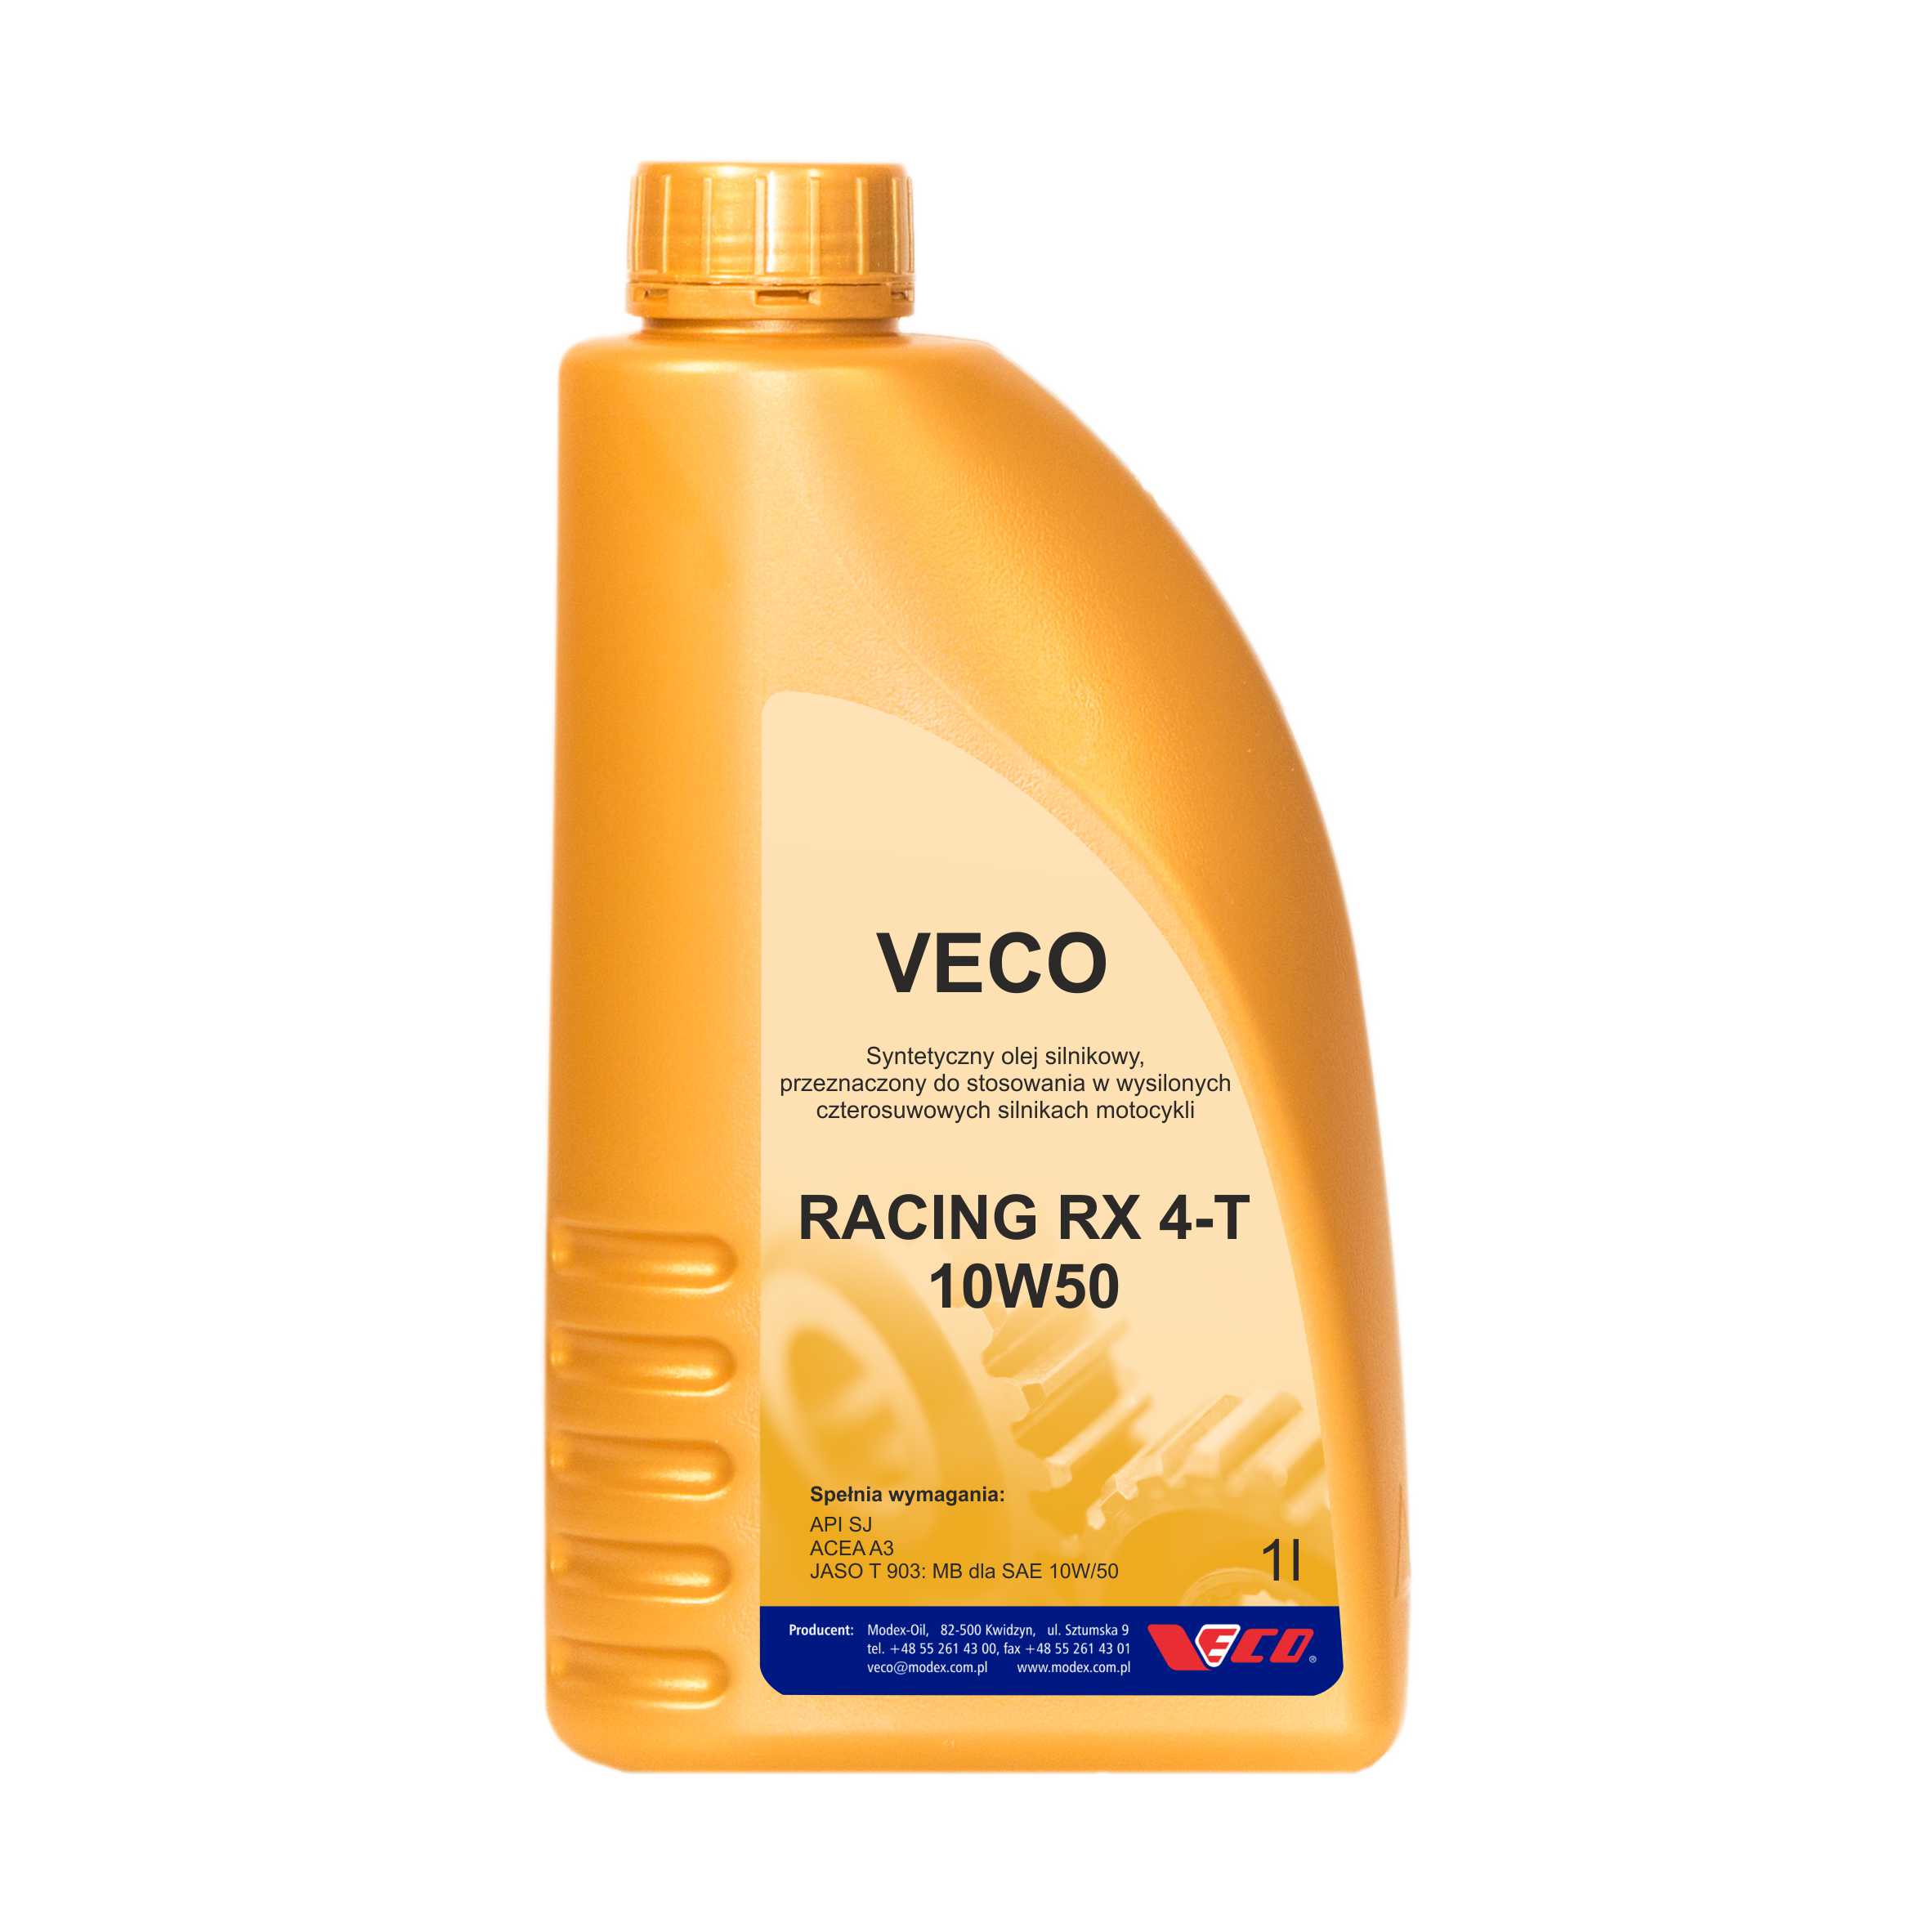 VECO RACING RX 4-T 10W50 opak. 1l